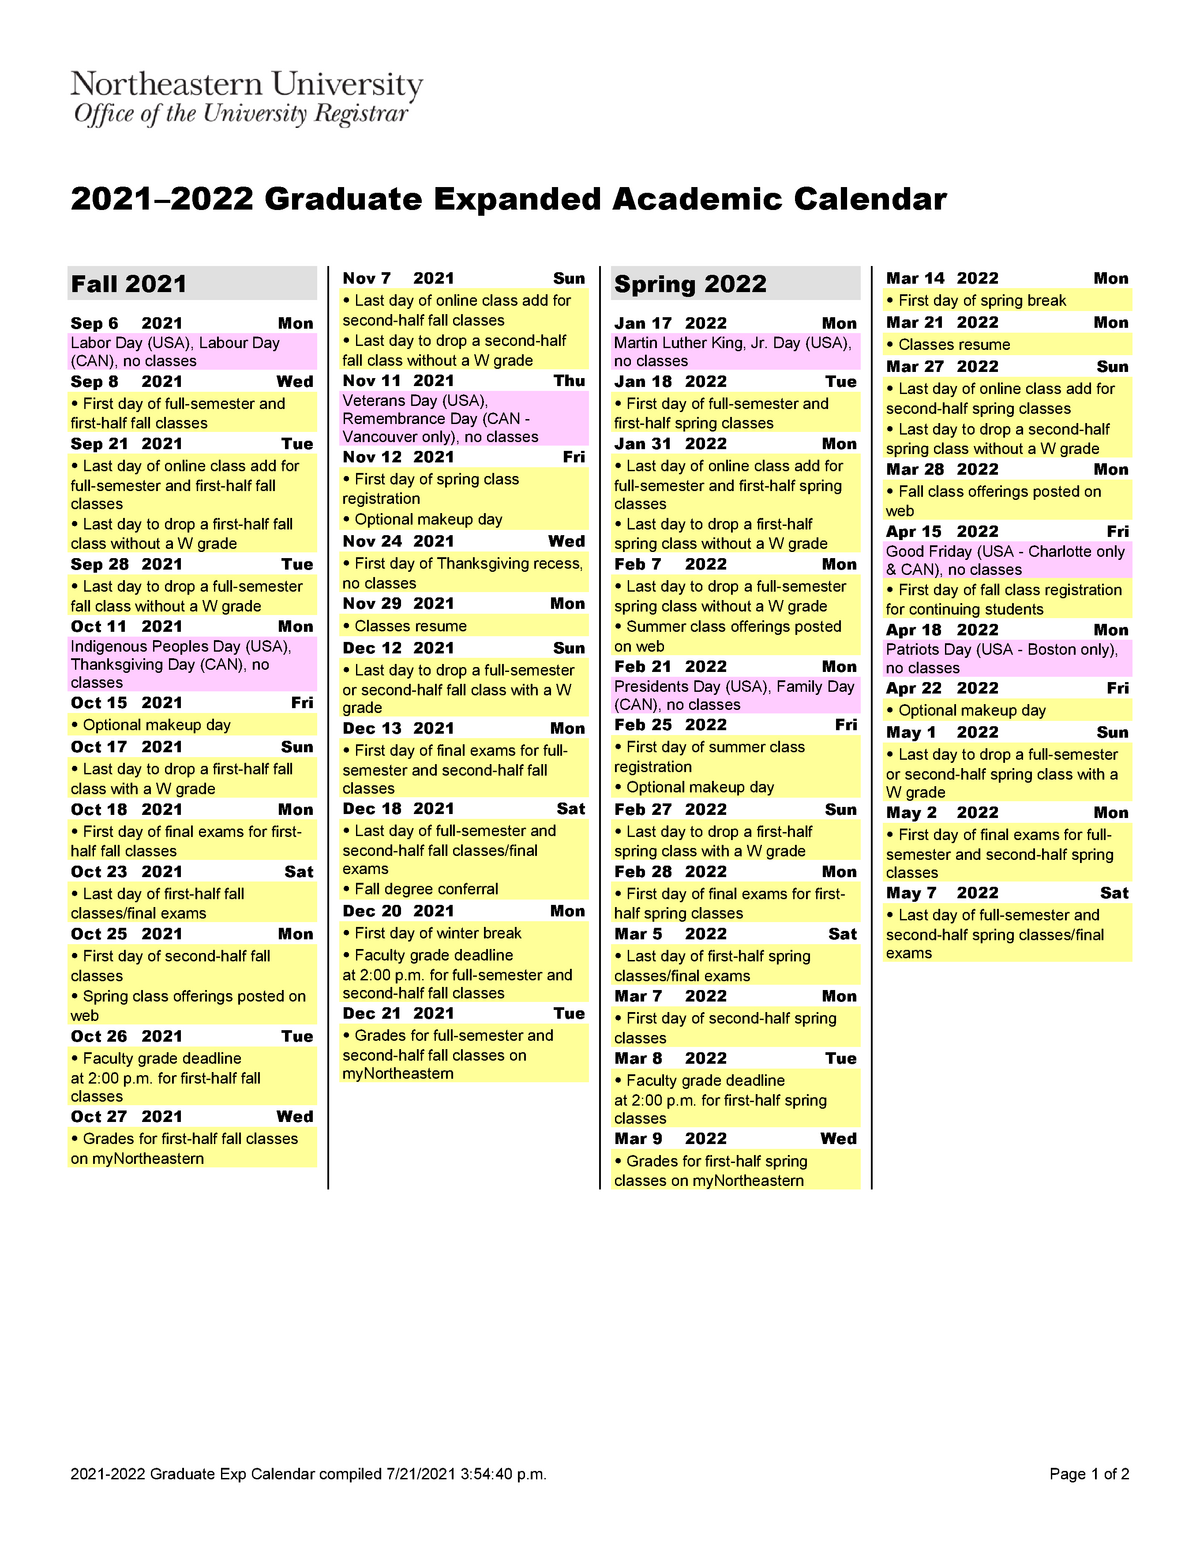 Ub Calendar Fall 2022 2021 2022 Gr Expanded Calendar List 3 - Info 6215 - Business Analysis -  Studocu